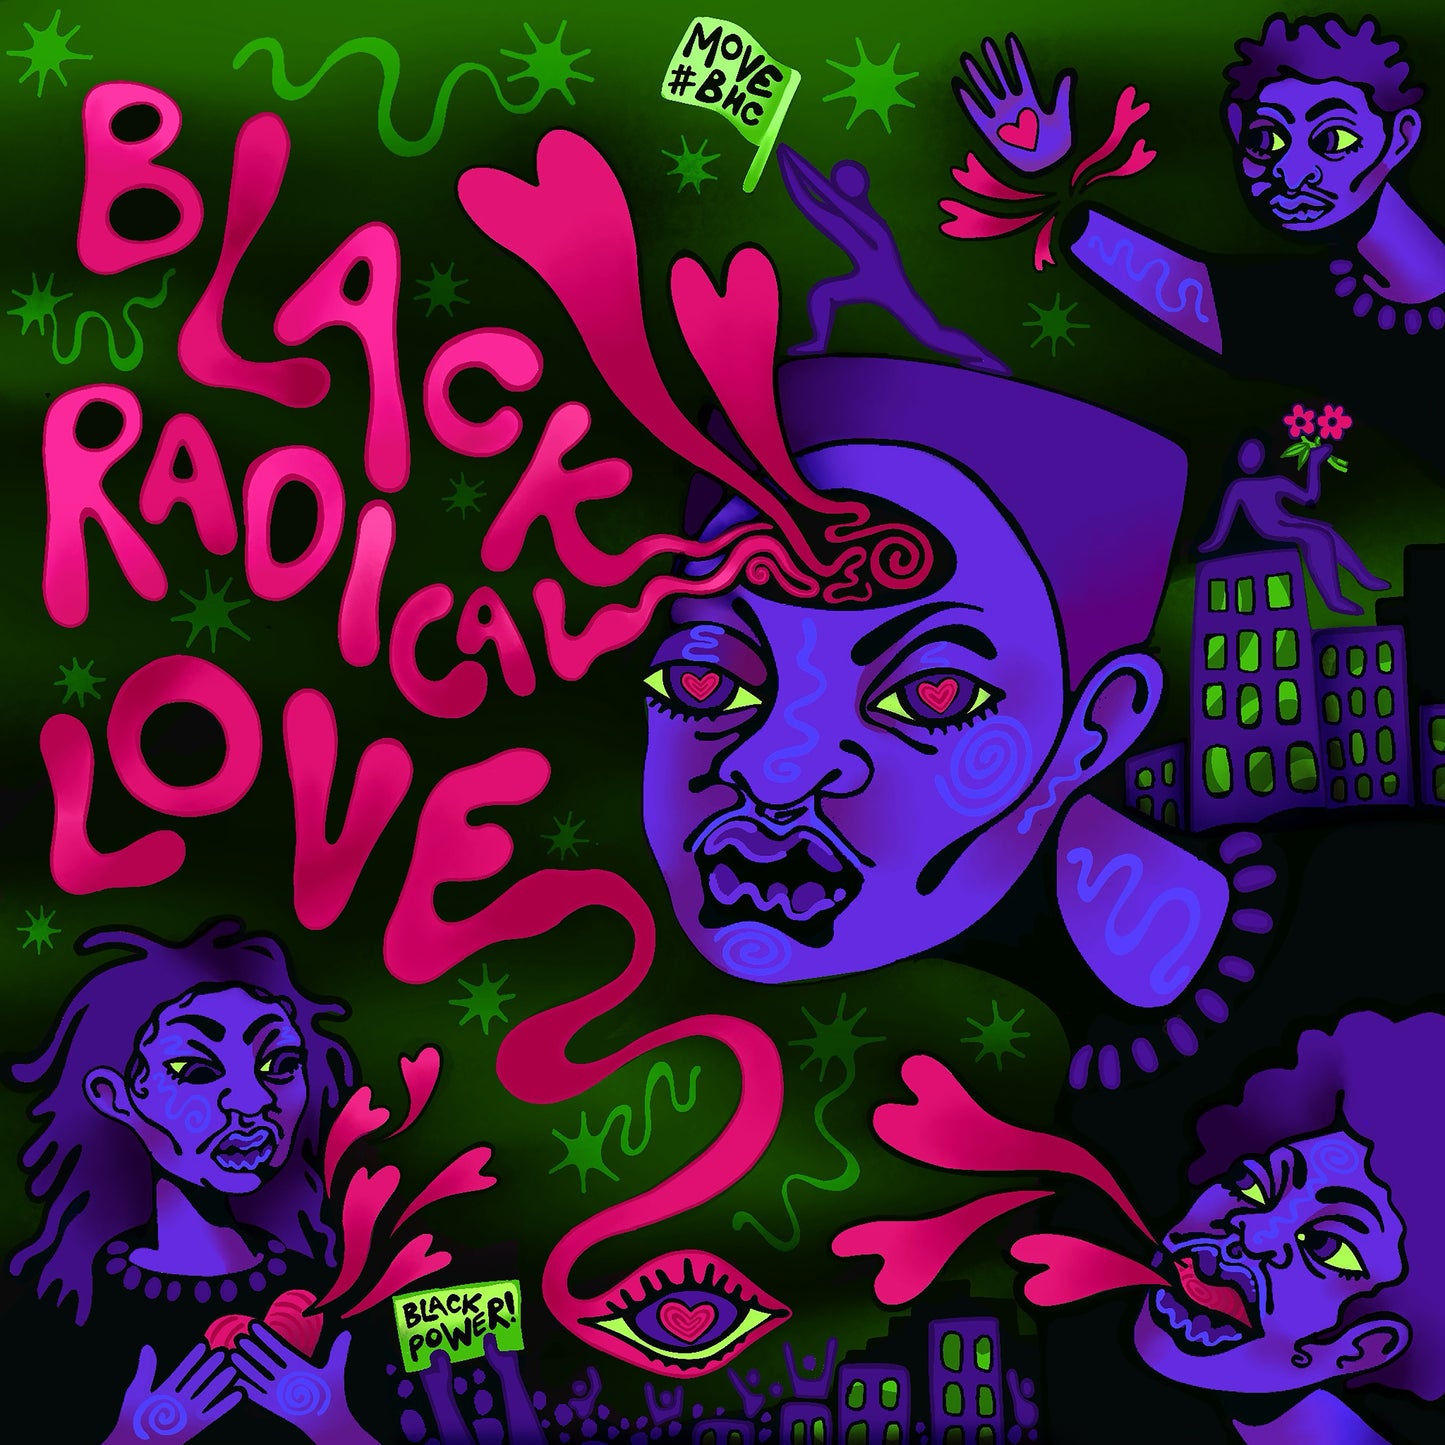 Move  "Black Radical Love" LP